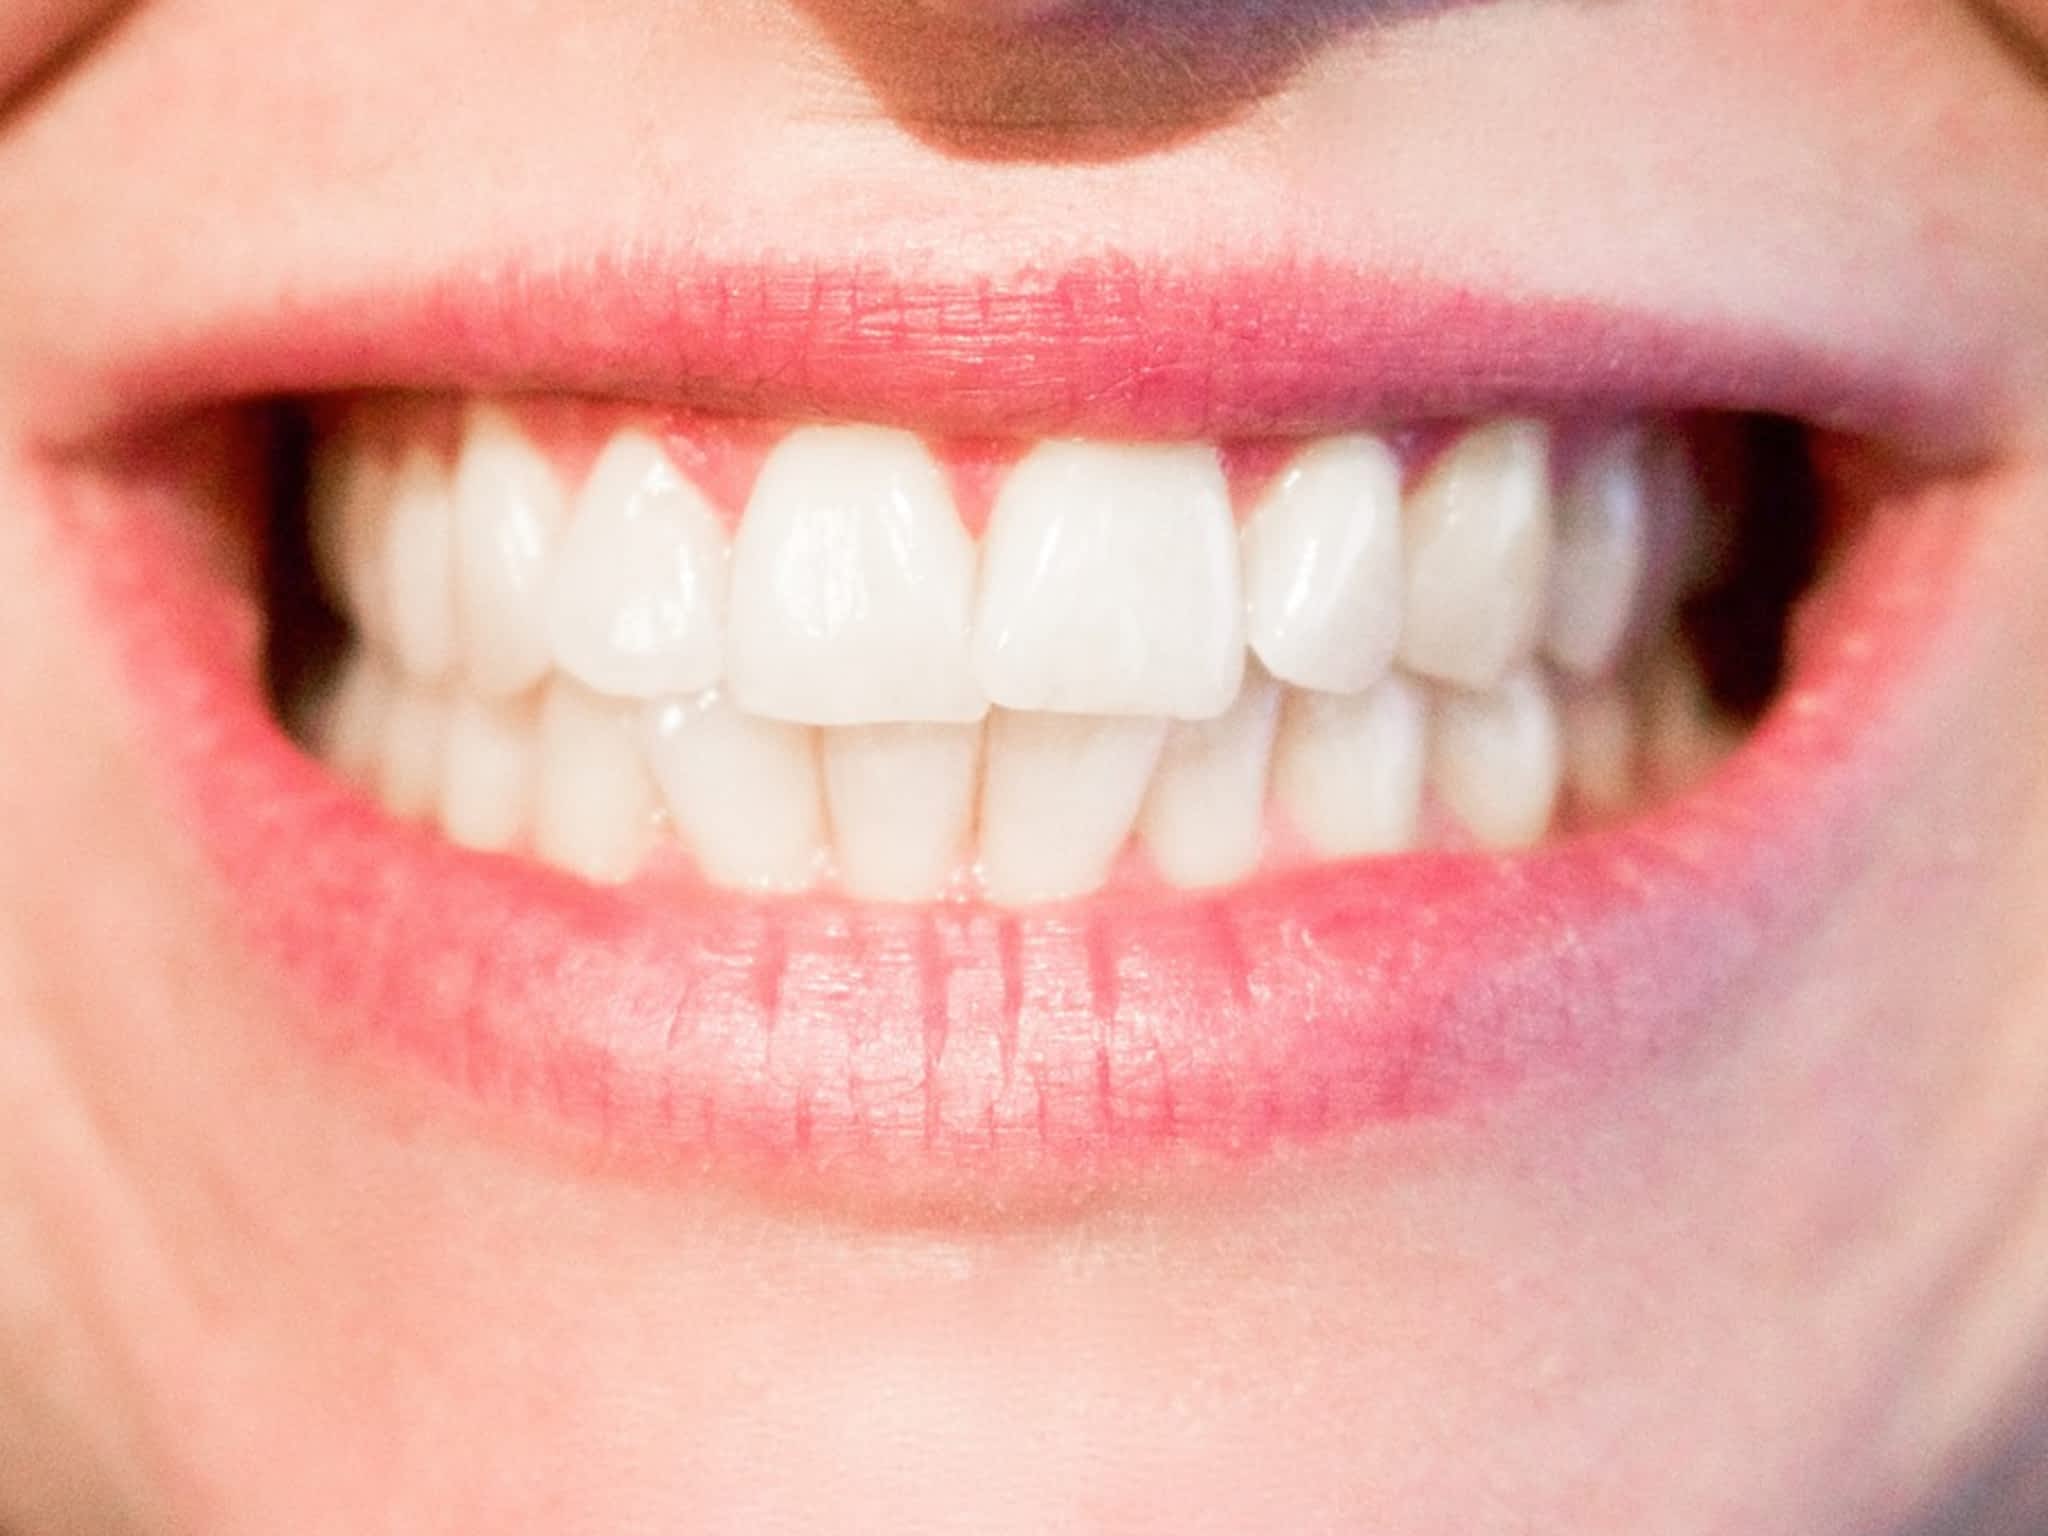 photo Carrefour Dentaire 440 - Dentiste